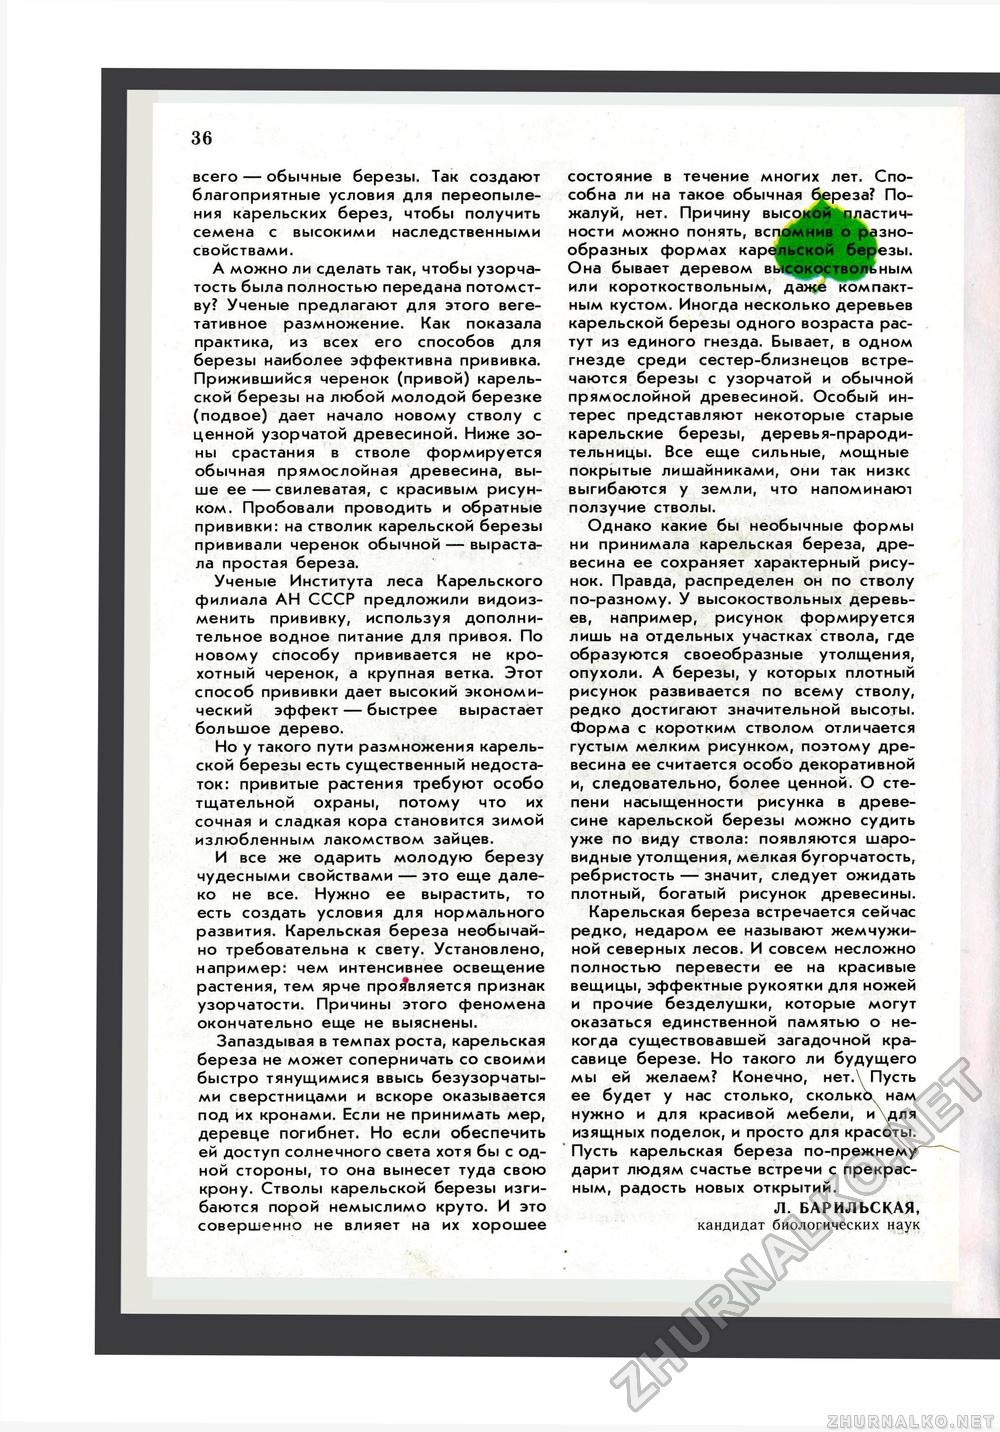 Юный Натуралист 1986-08, страница 35